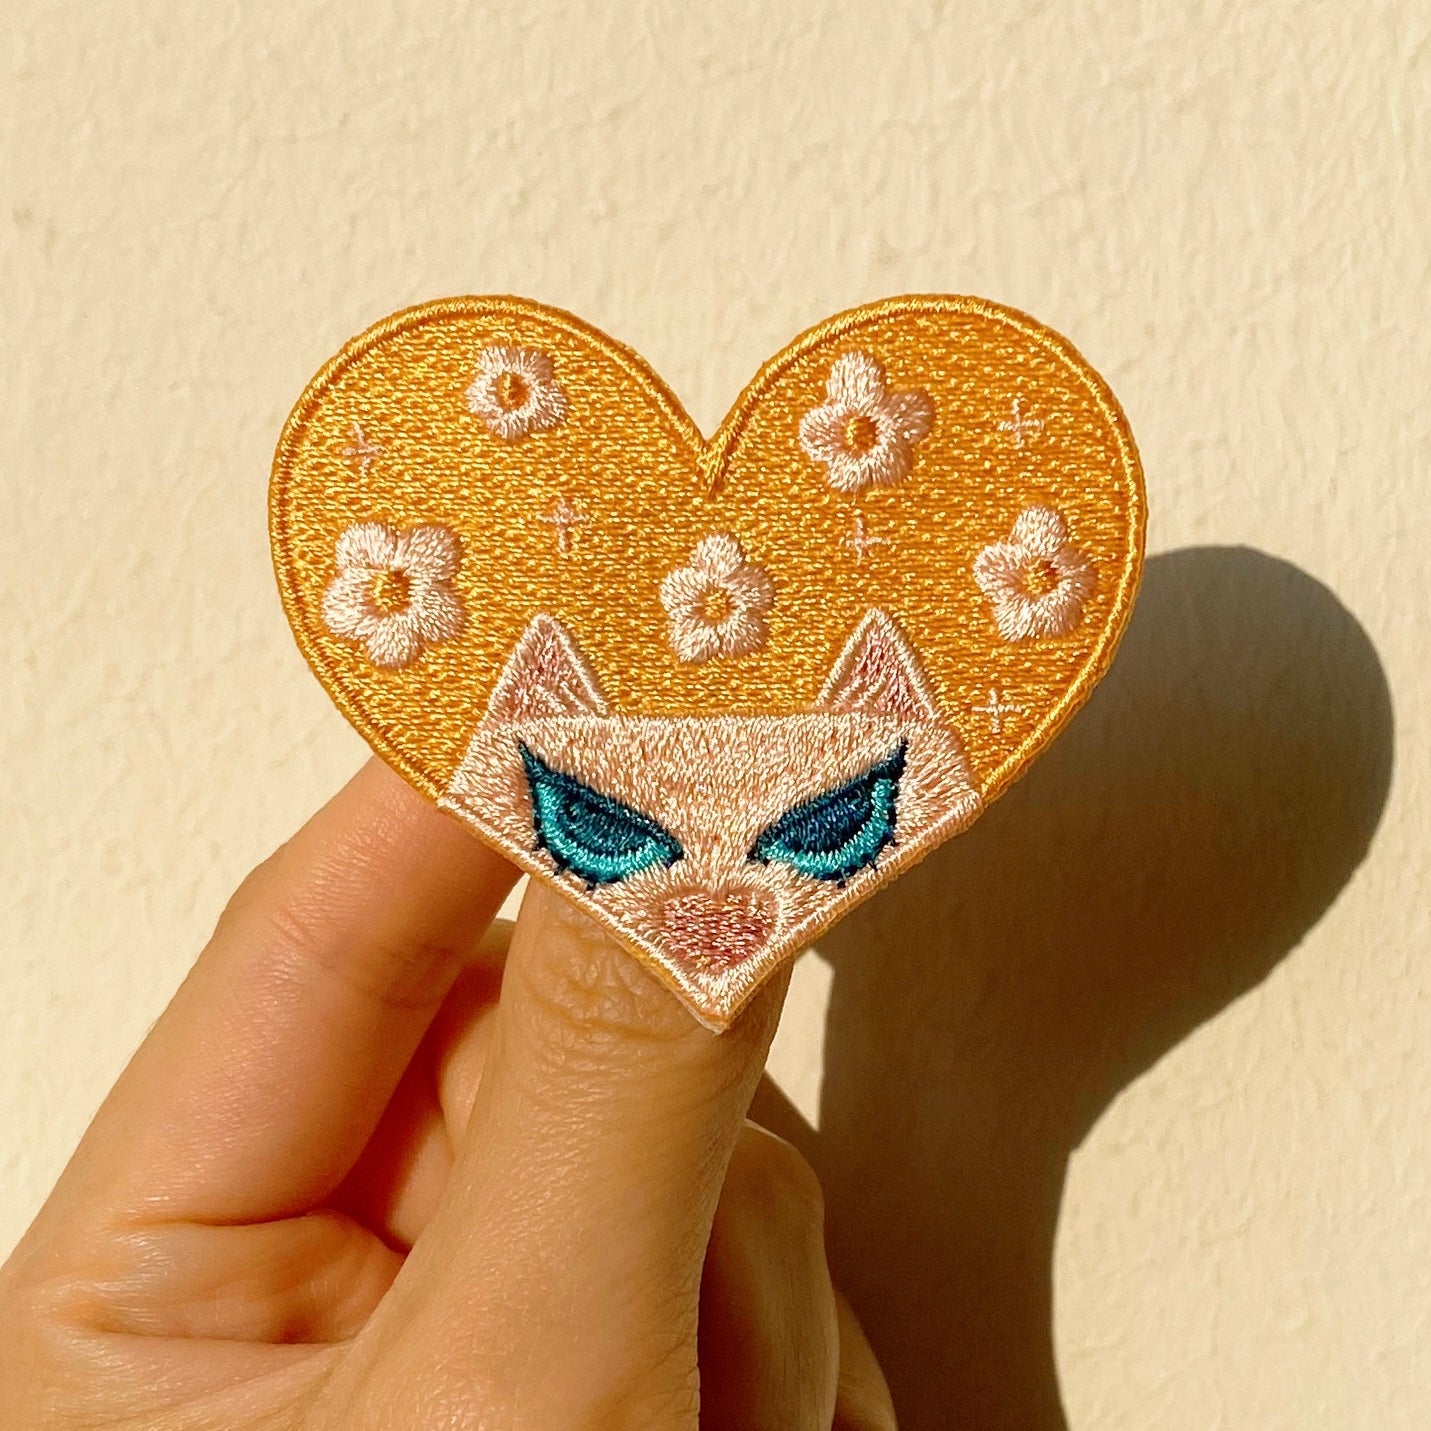 ShinnerCXI Embroidery Pin - White Daisy Heart Cat